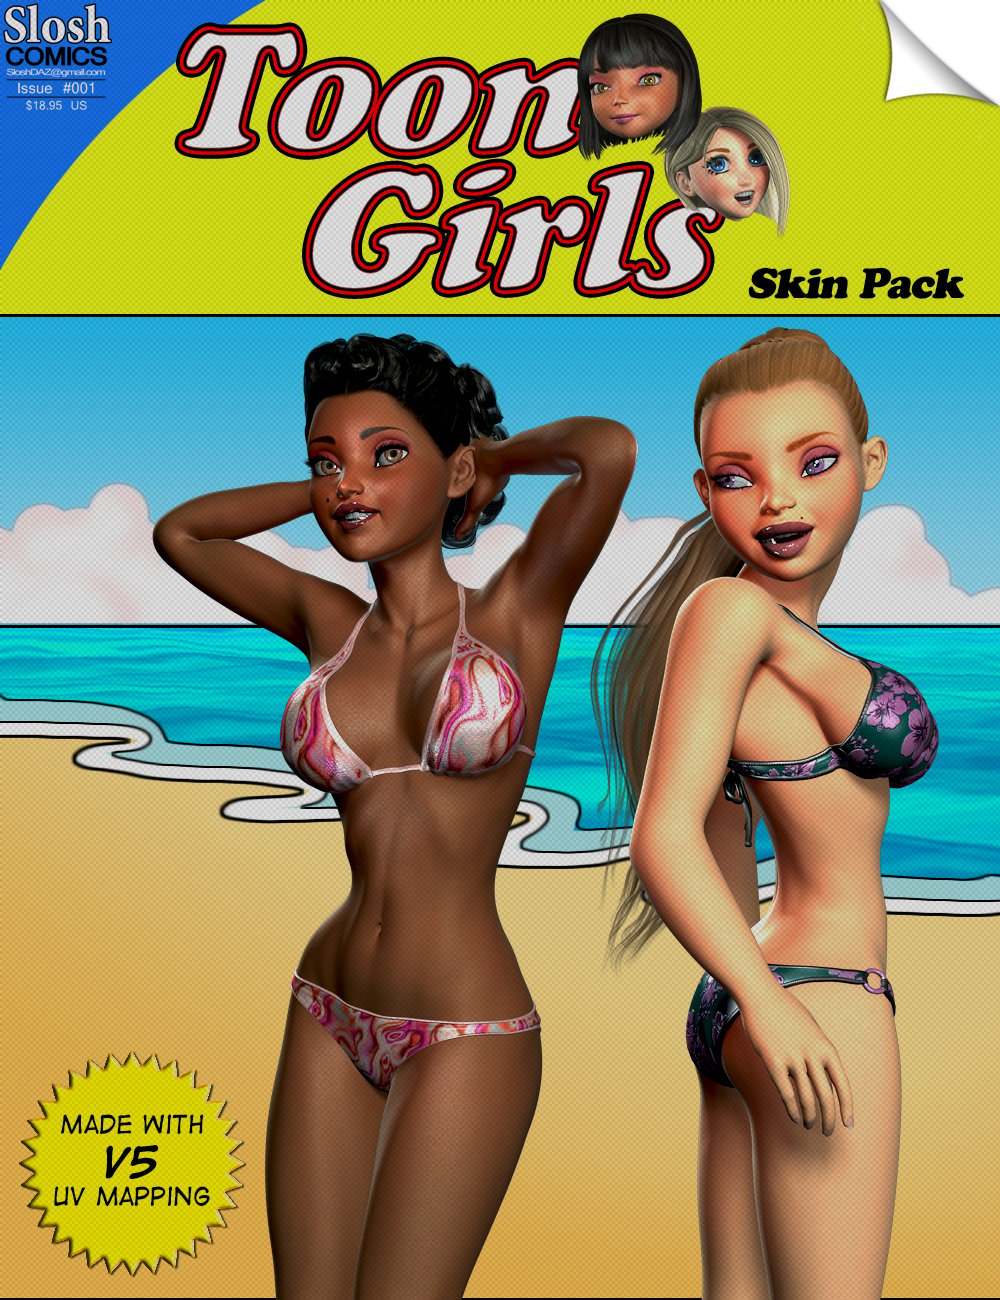 Toon Girls Skin Pack by: SloshWerks, 3D Models by Daz 3D